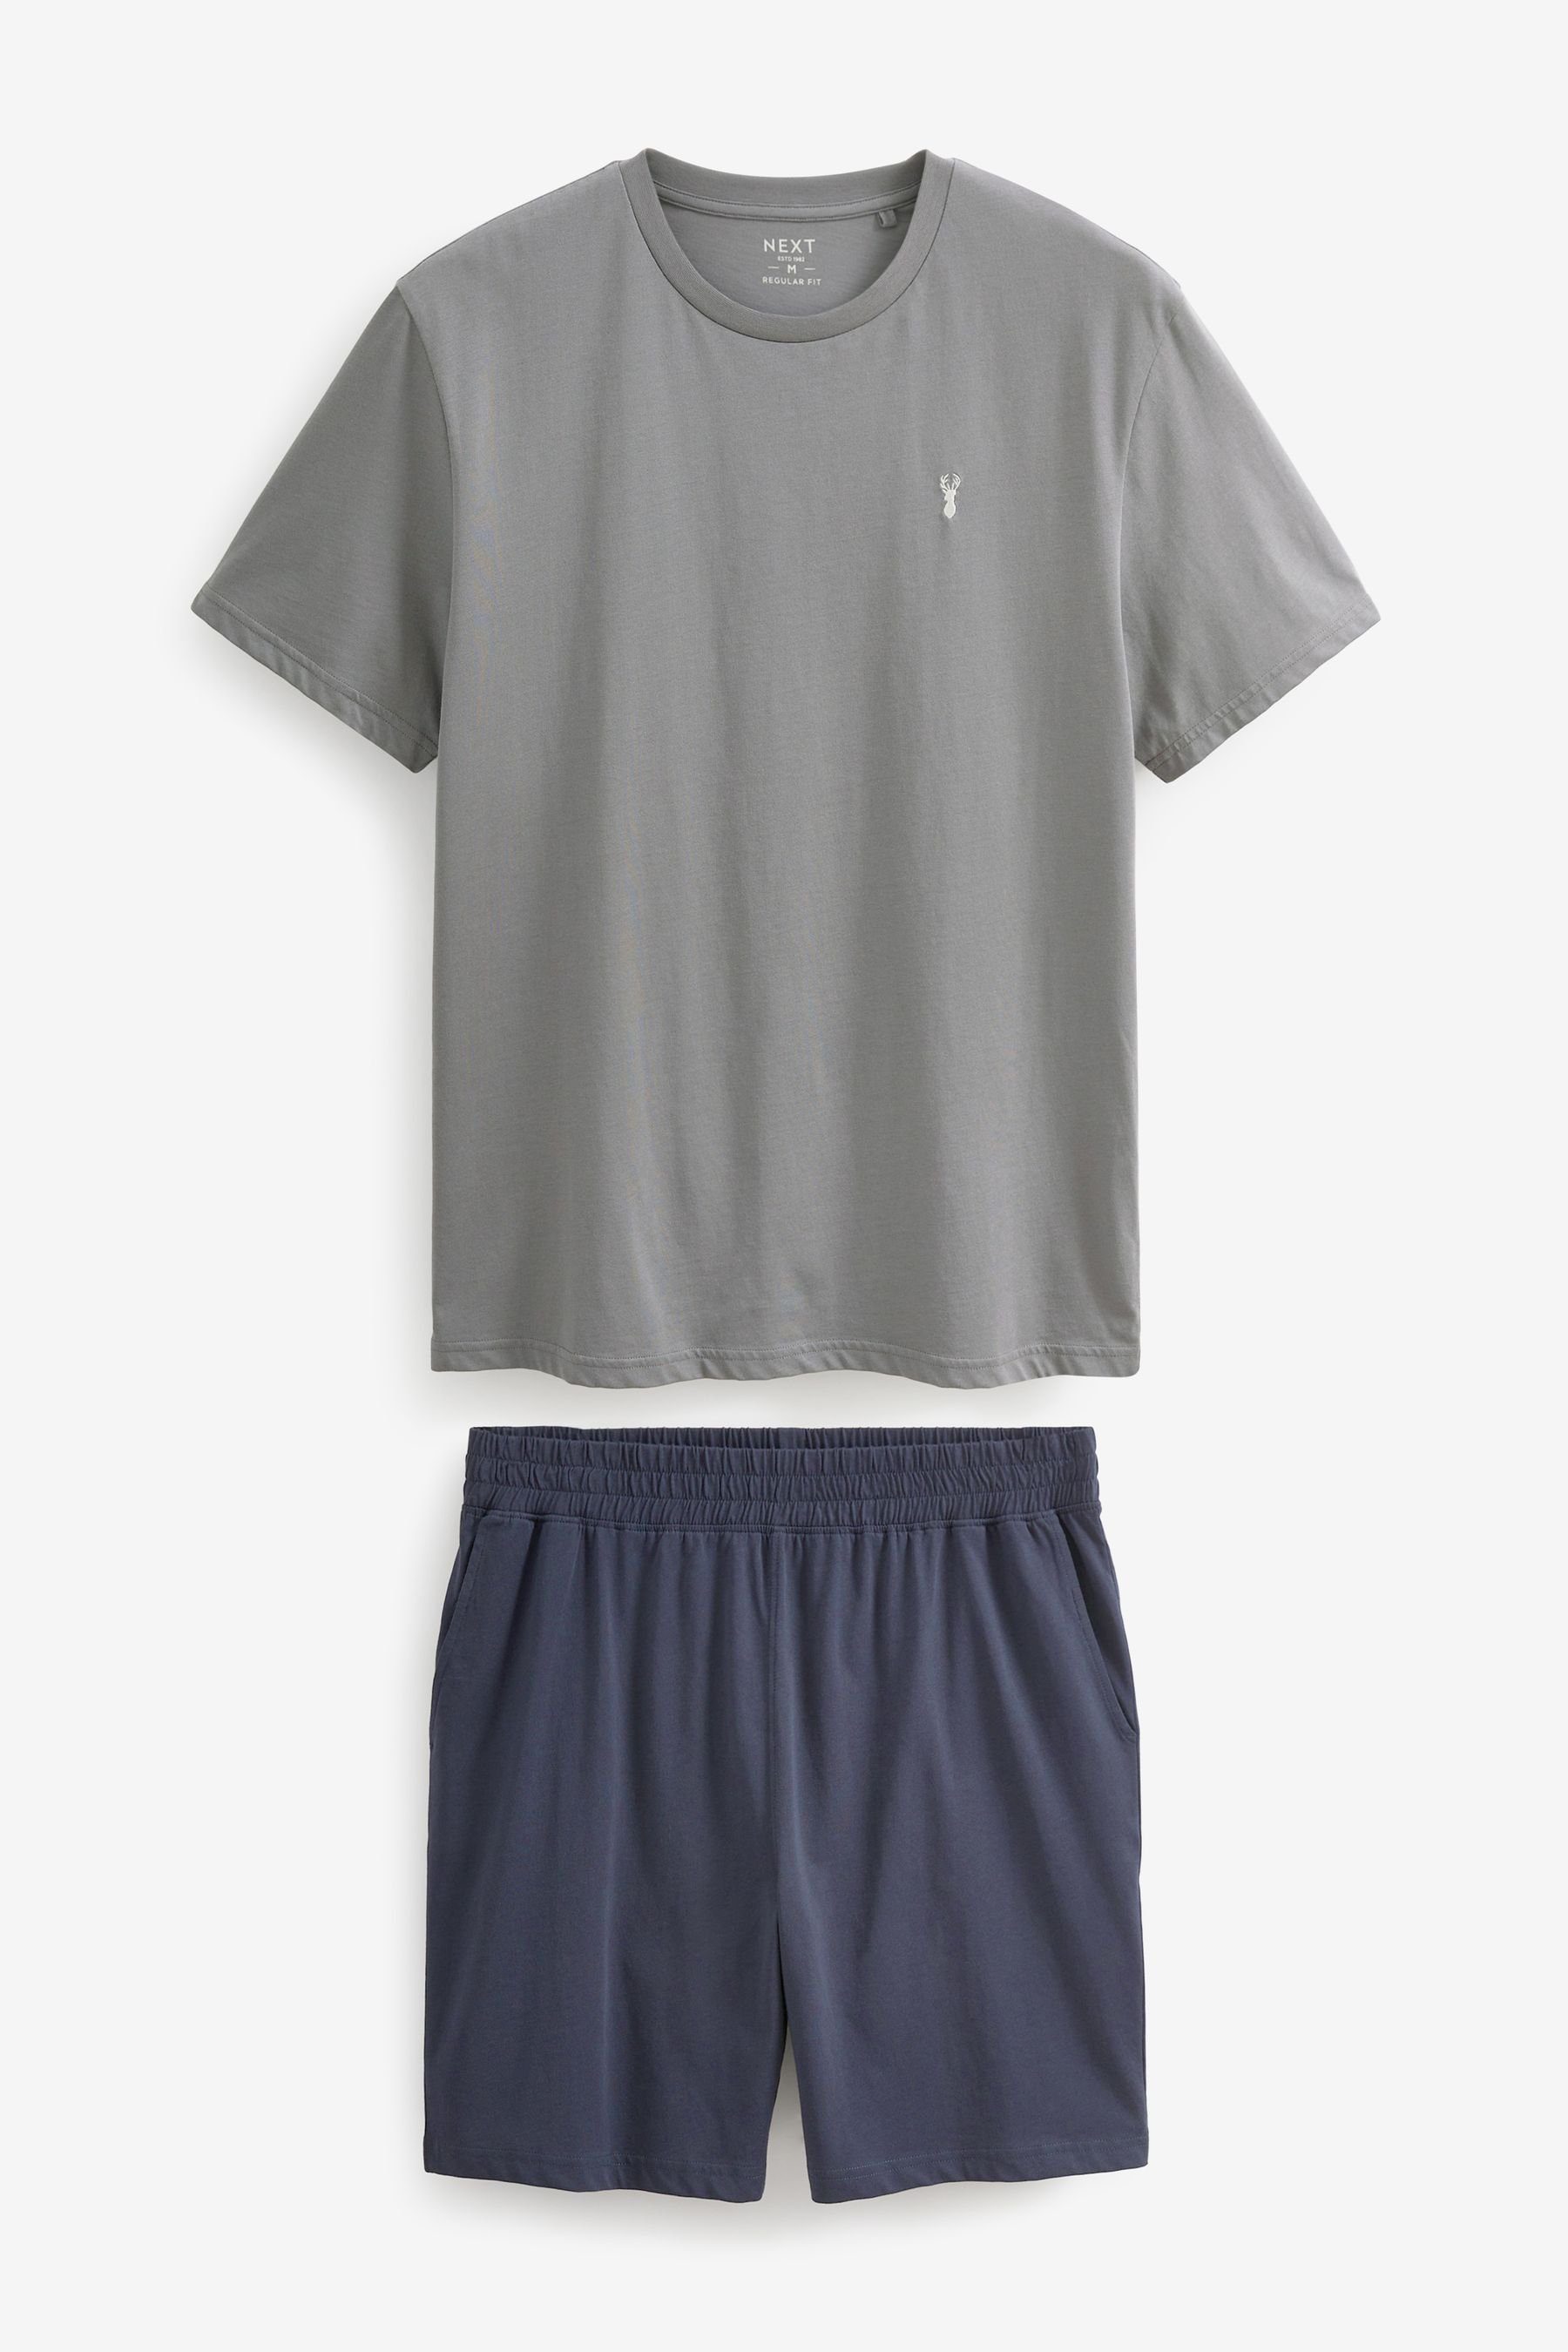 Next Pyjama Jersey-Schlafanzug mit Shorts (2 tlg) Slate Grey/Black